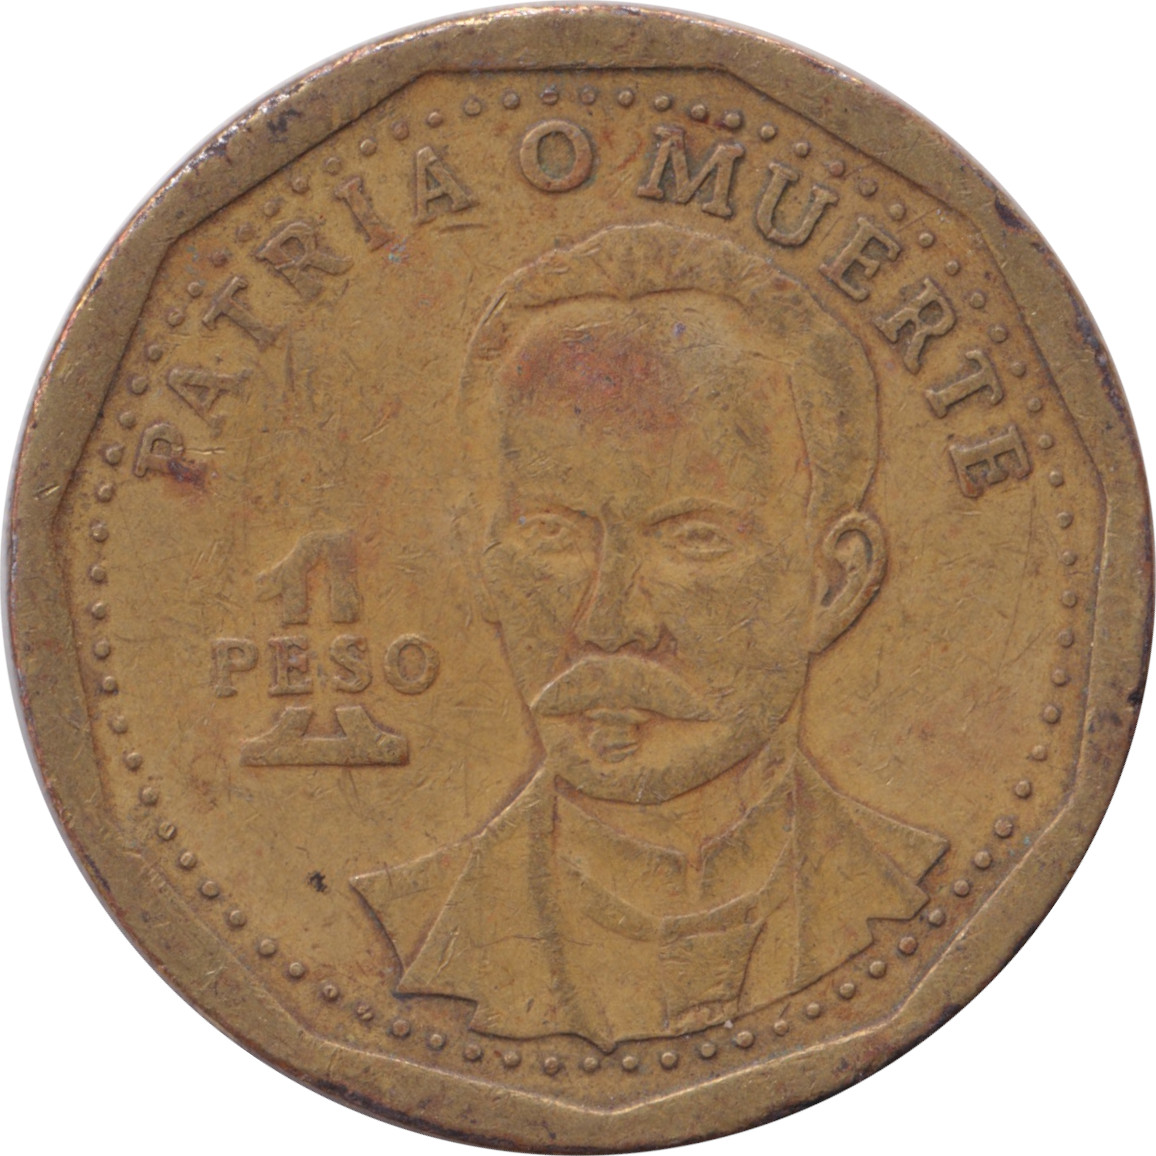 1 peso - José Martin